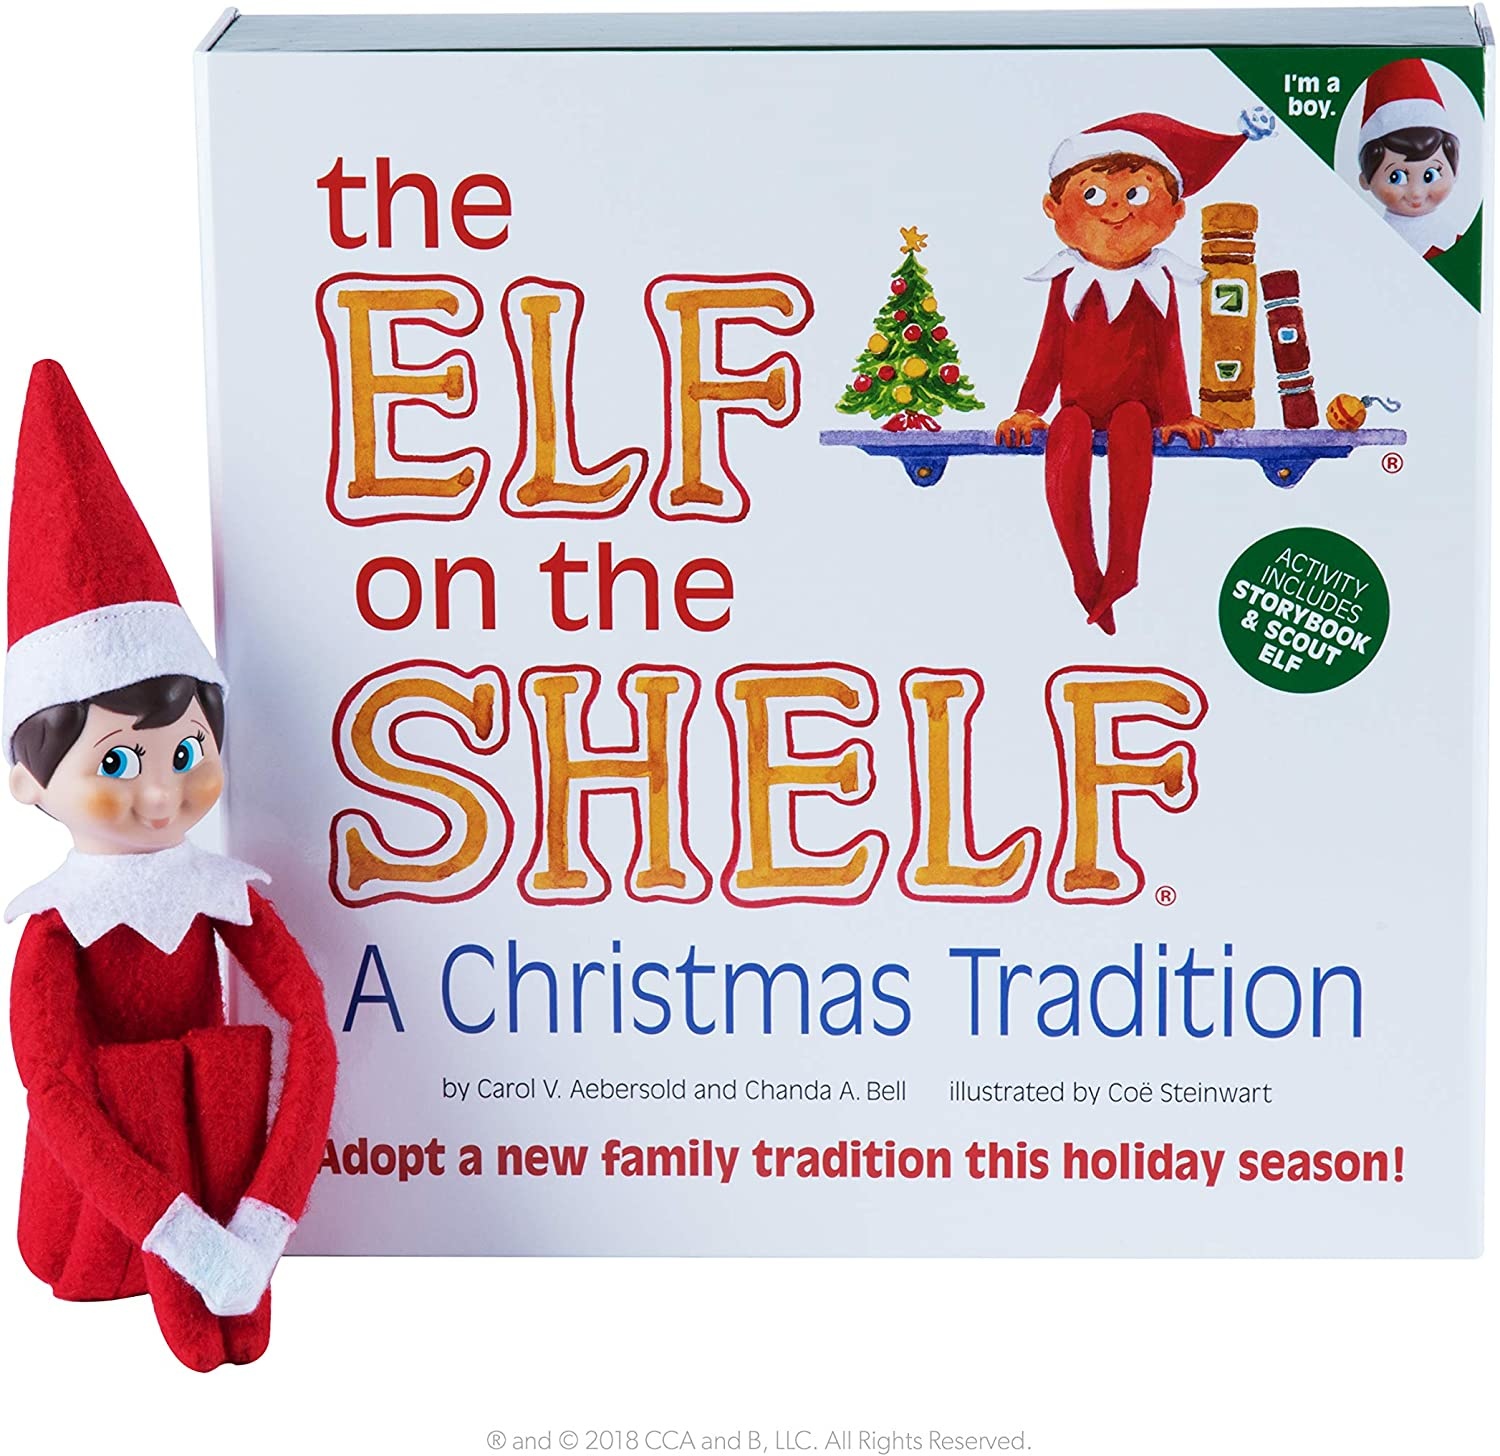 elf-on-the-shelf-with-toys-danielaboltres-de